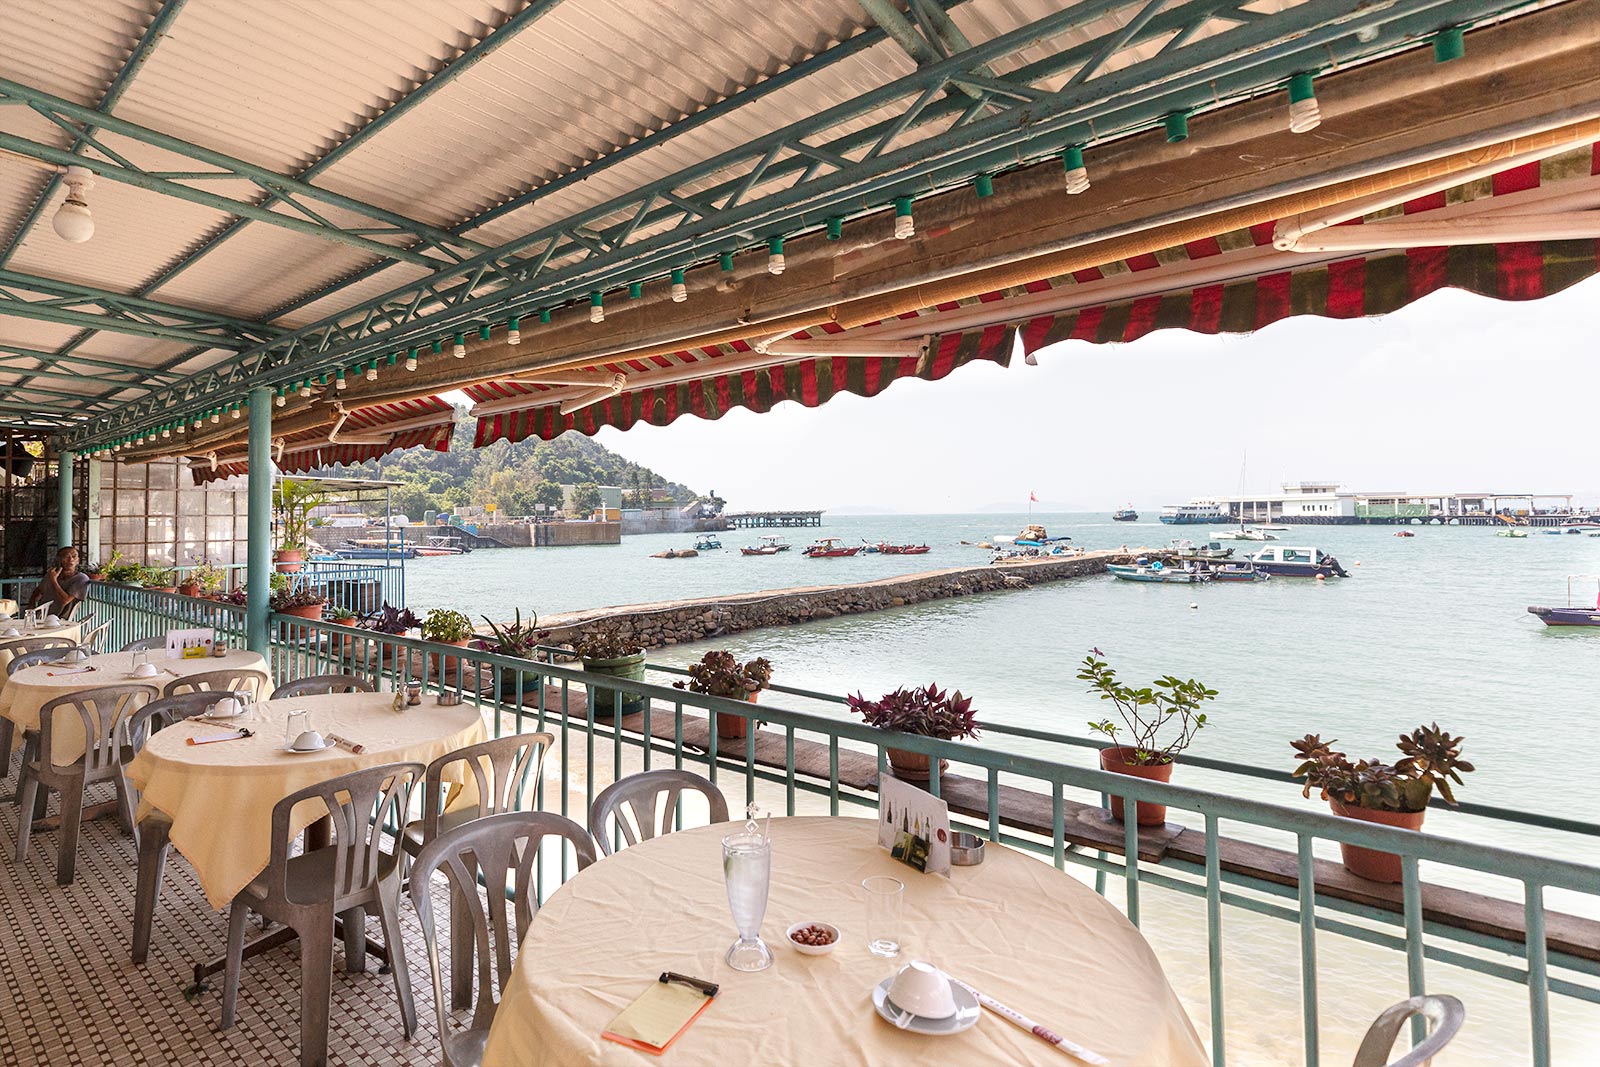 Seafood restaurants line the seafront in both Yung Shue Wan and Sok Kwu Wan on Lamma Island